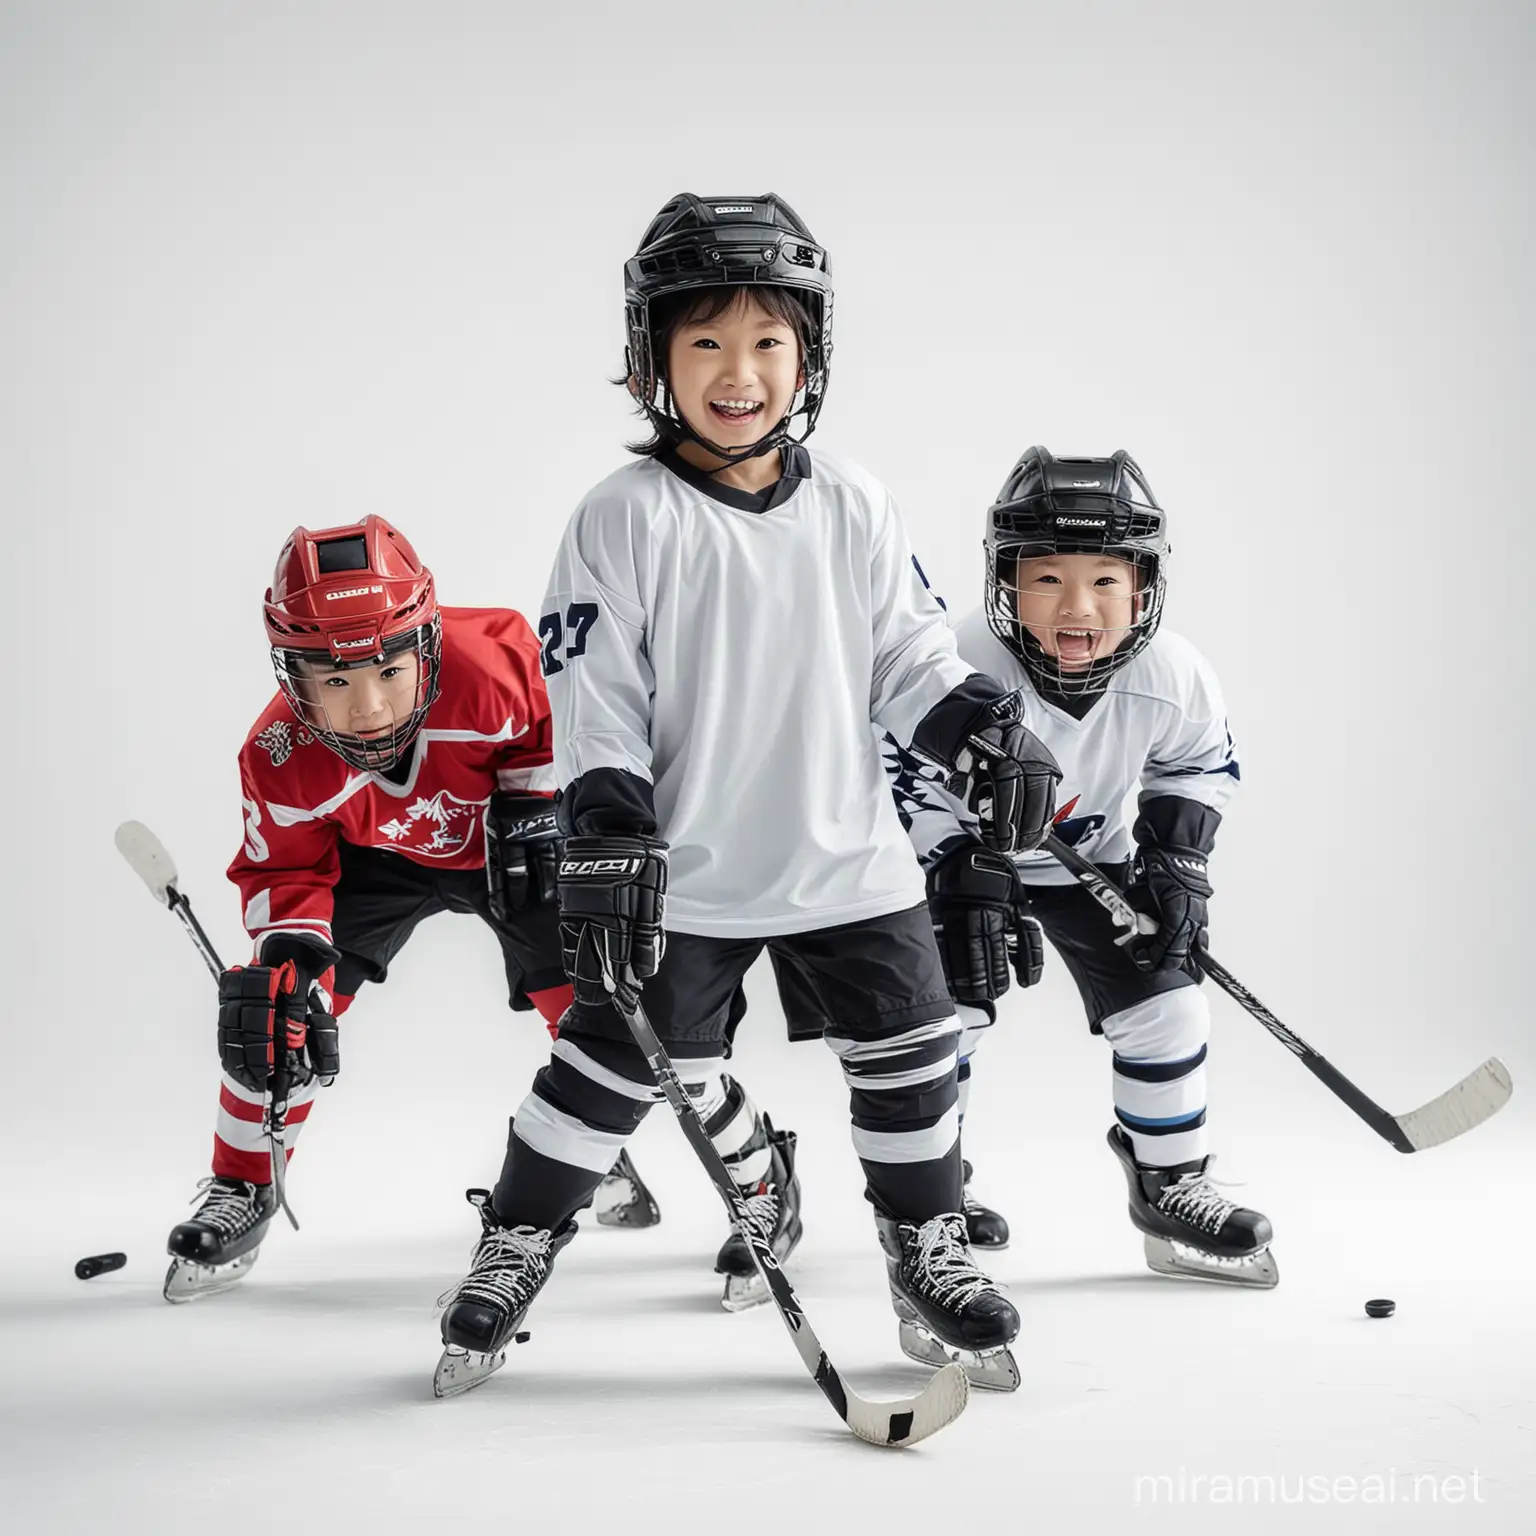 Asian Children Playing Ice Hockey on White Background